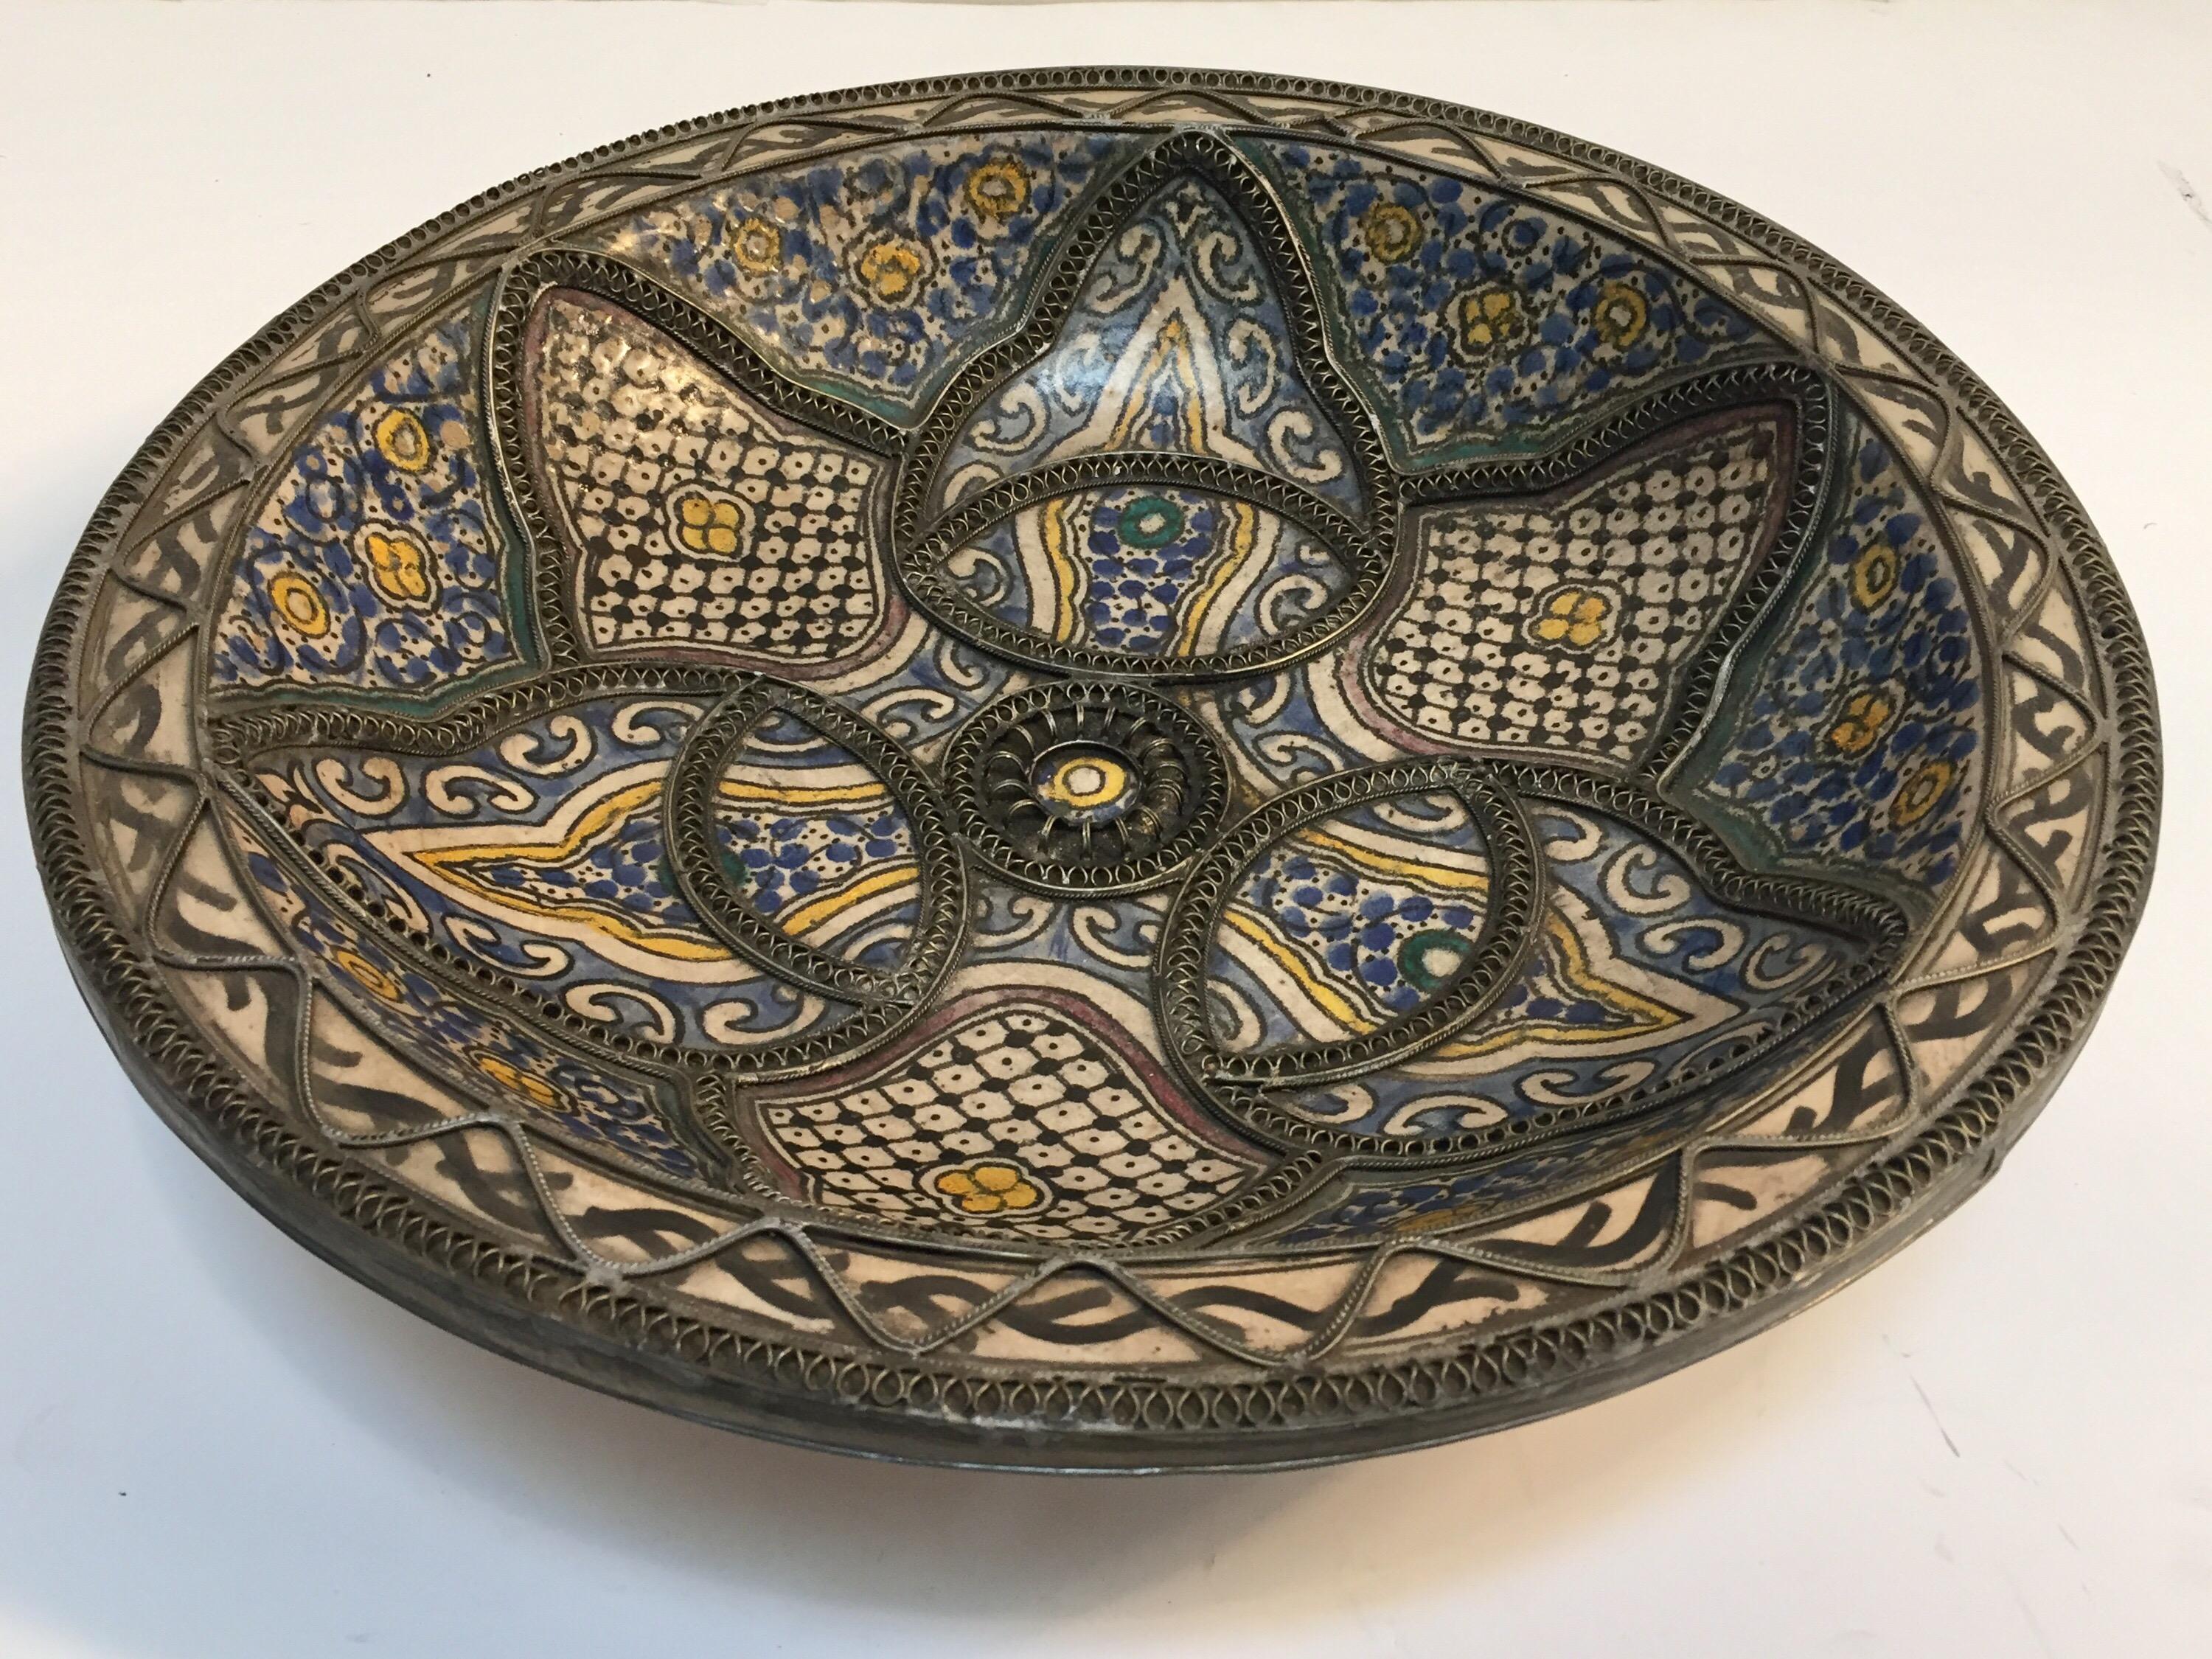 Moroccan Moorish Ceramic Bowl Adorned with Silver Filigree from Fez Morocco